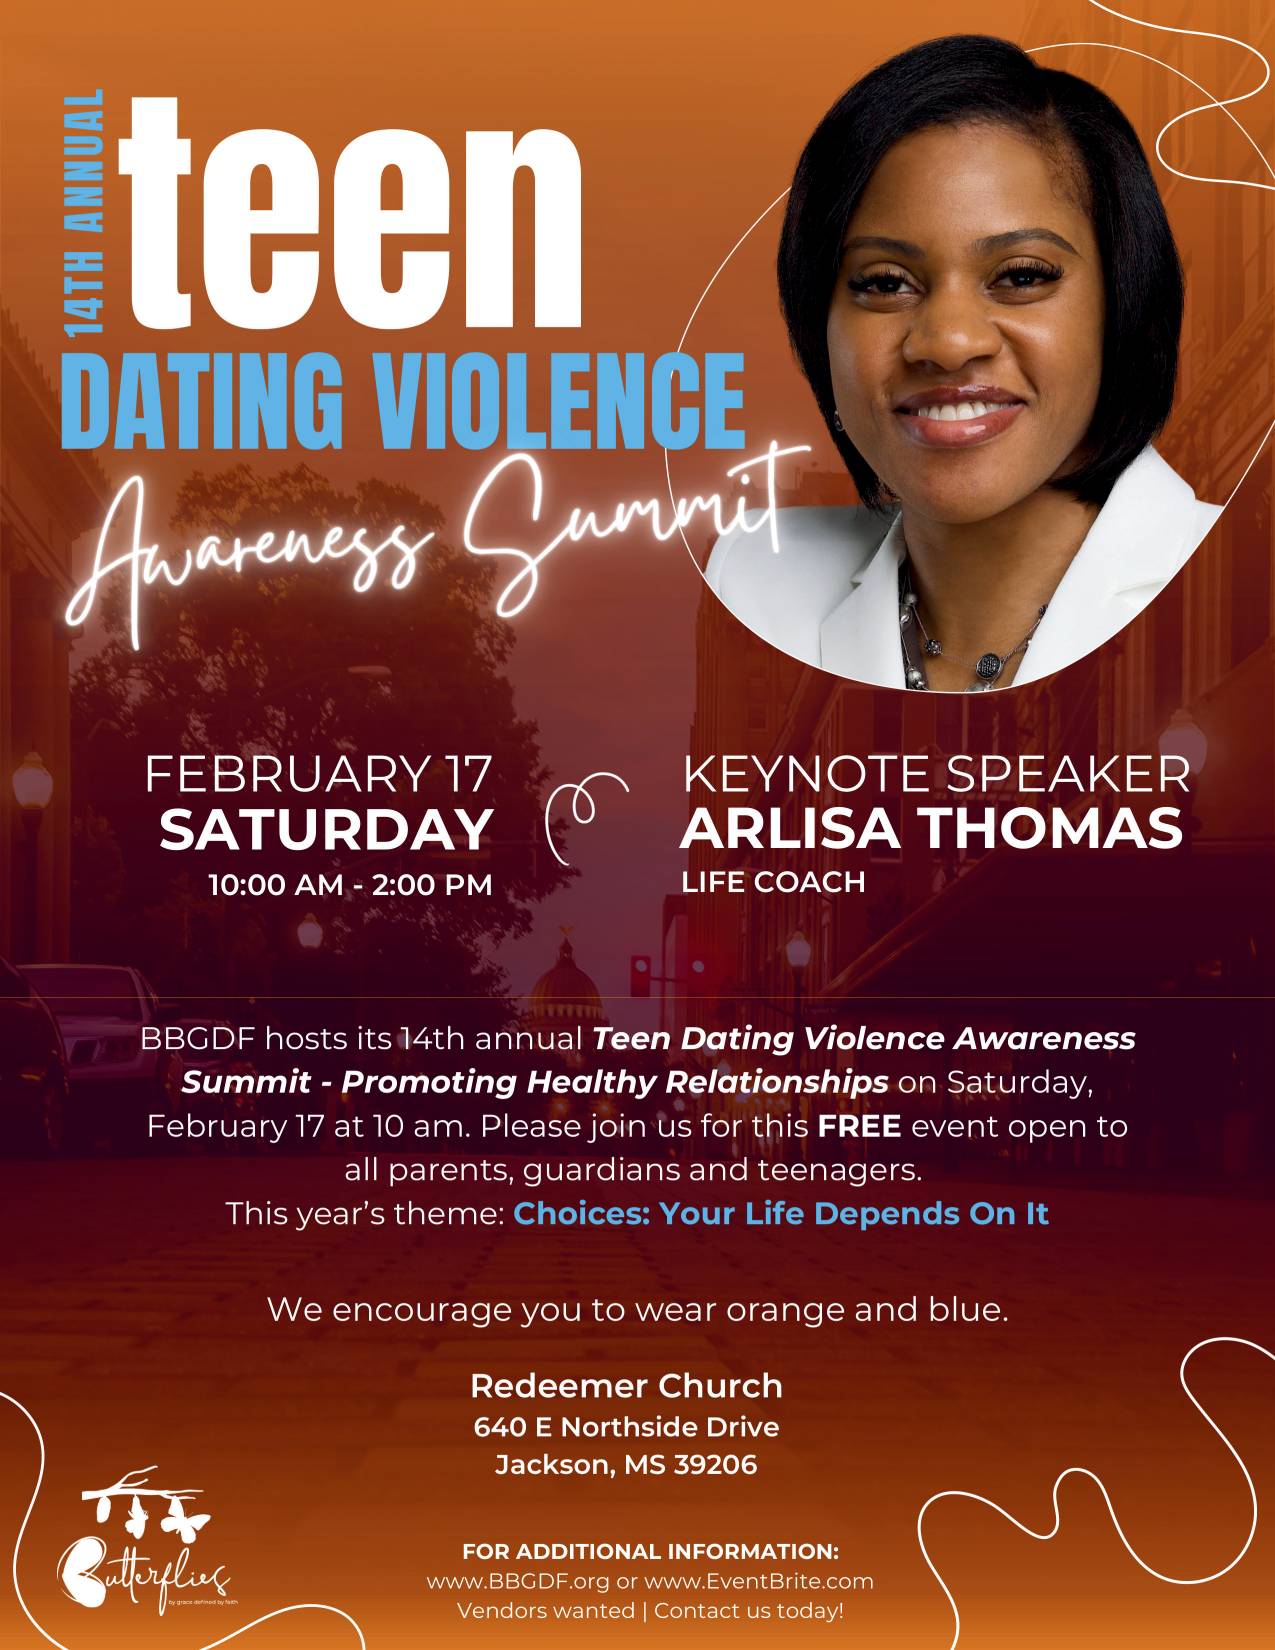 Teen Dating Violence Summit